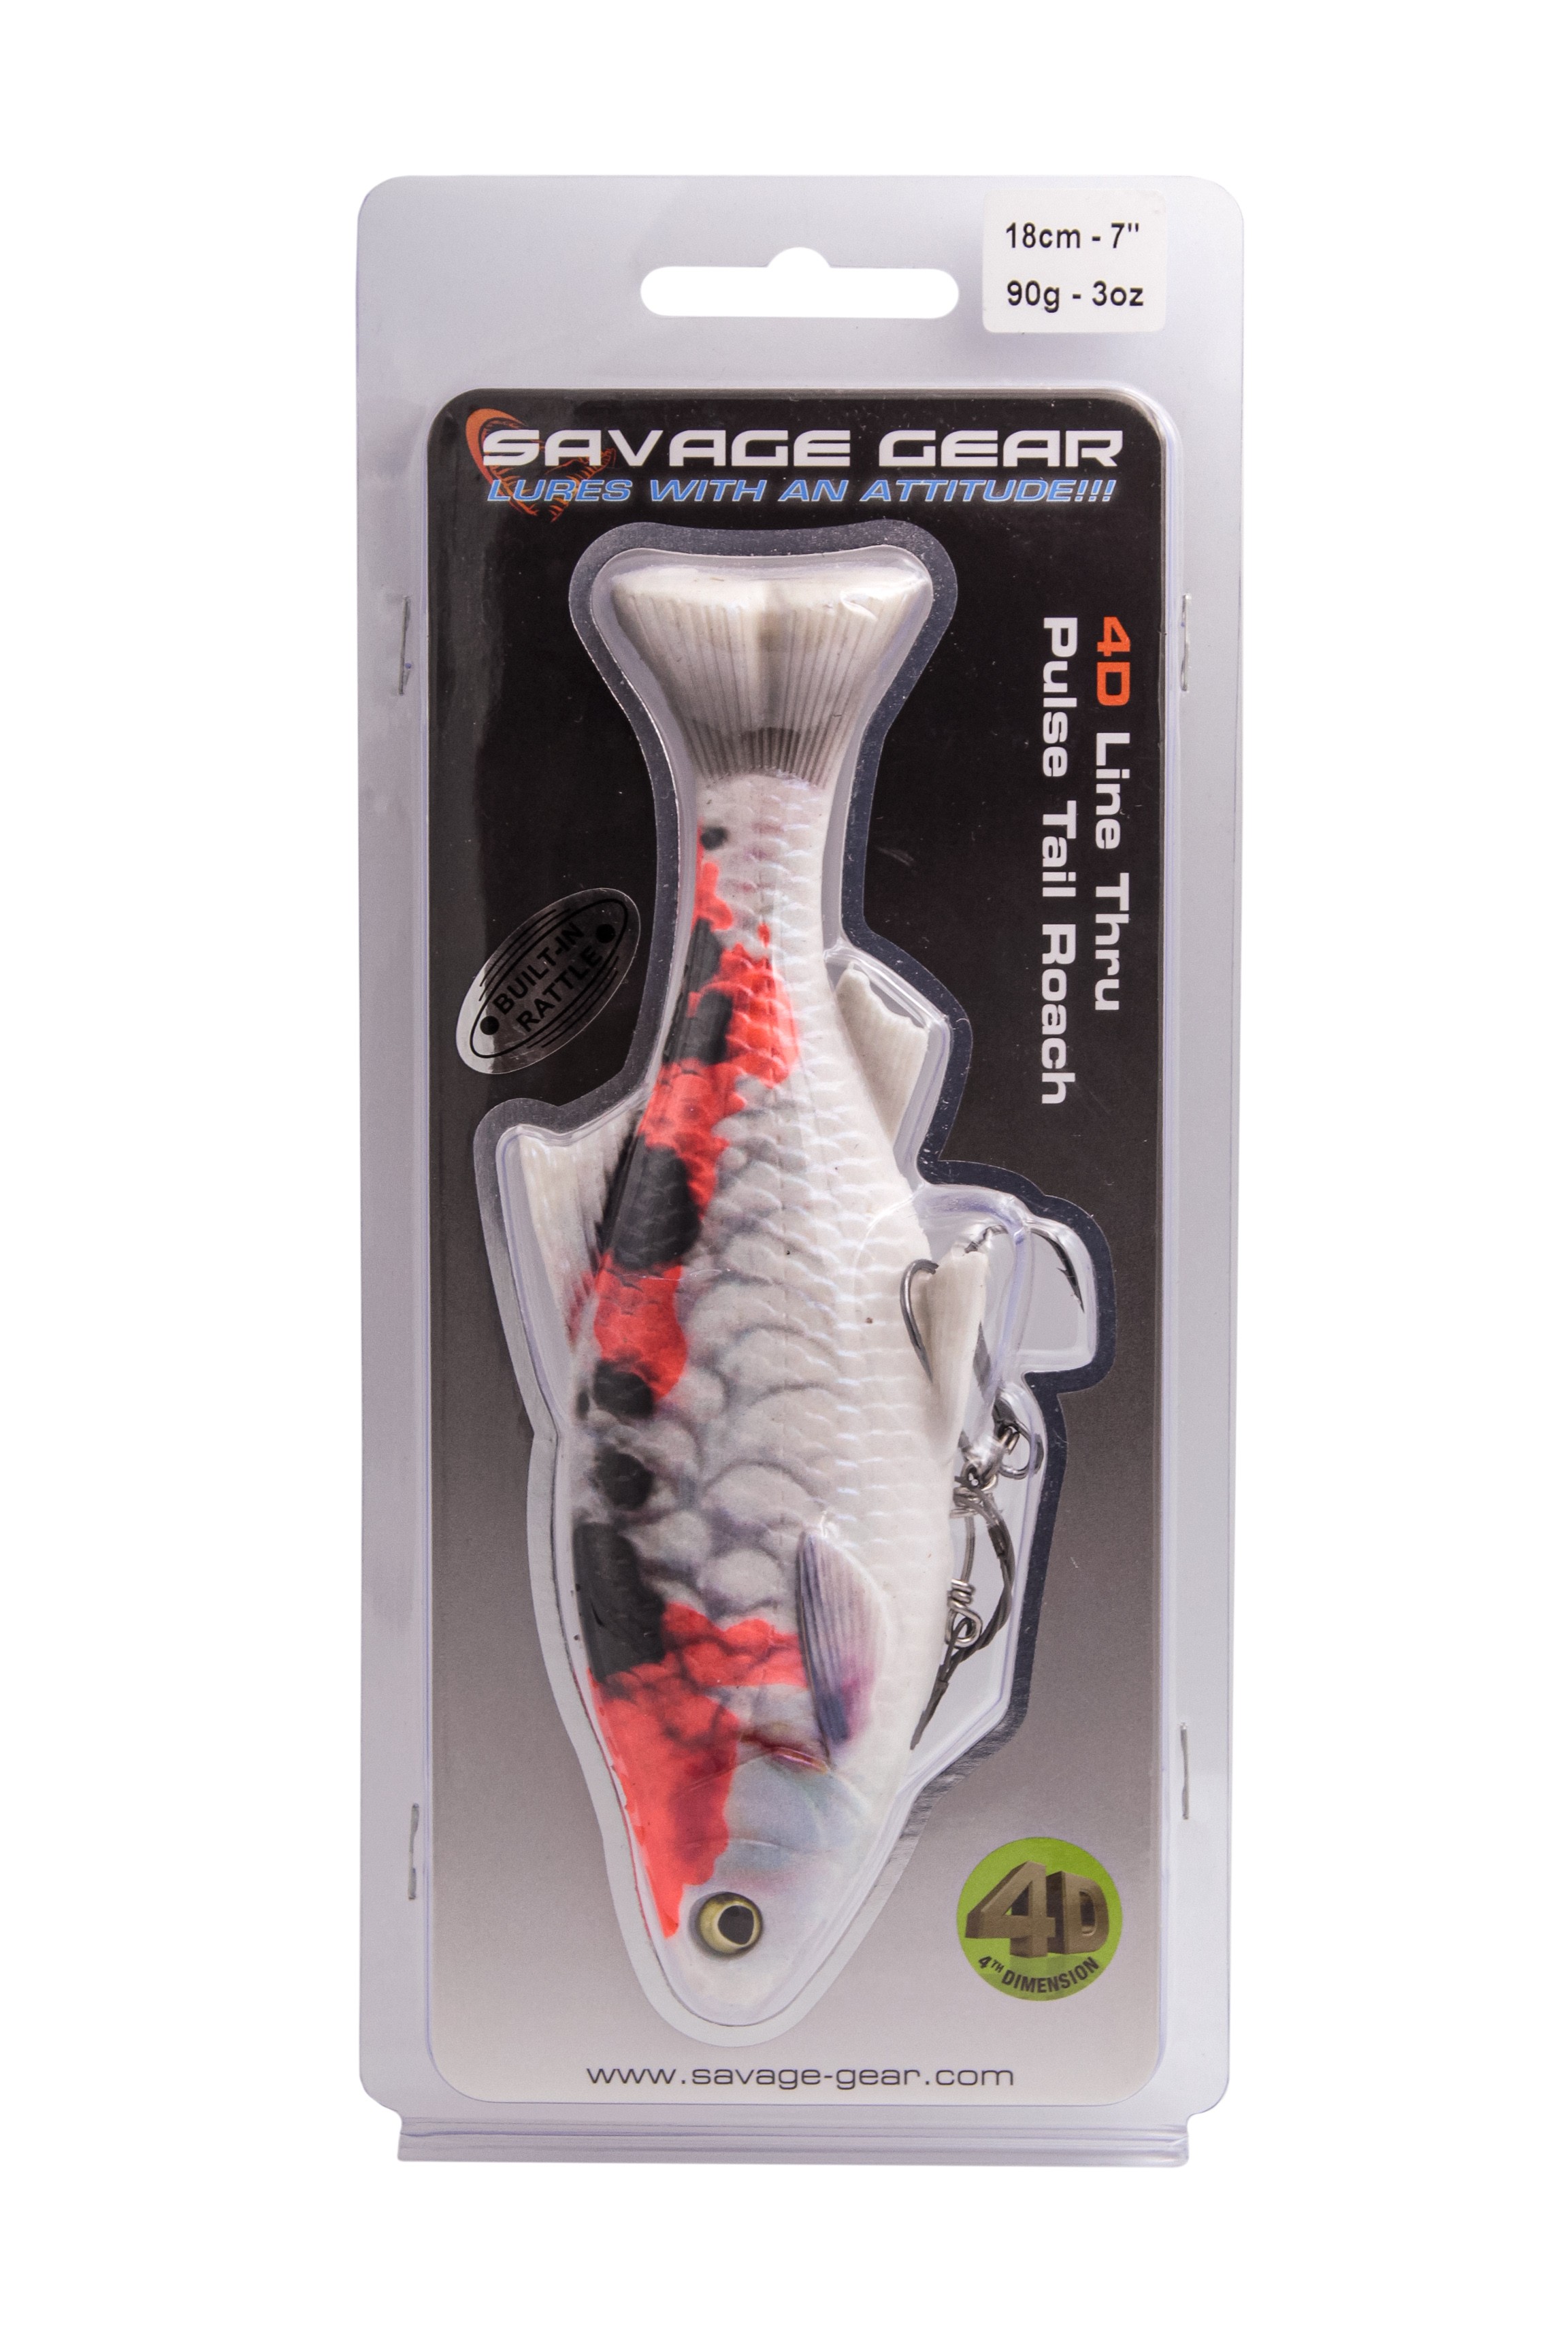 Приманка Savage Gear 4D Line thru pulse tail roach 18см 90гр SS koi - фото 1